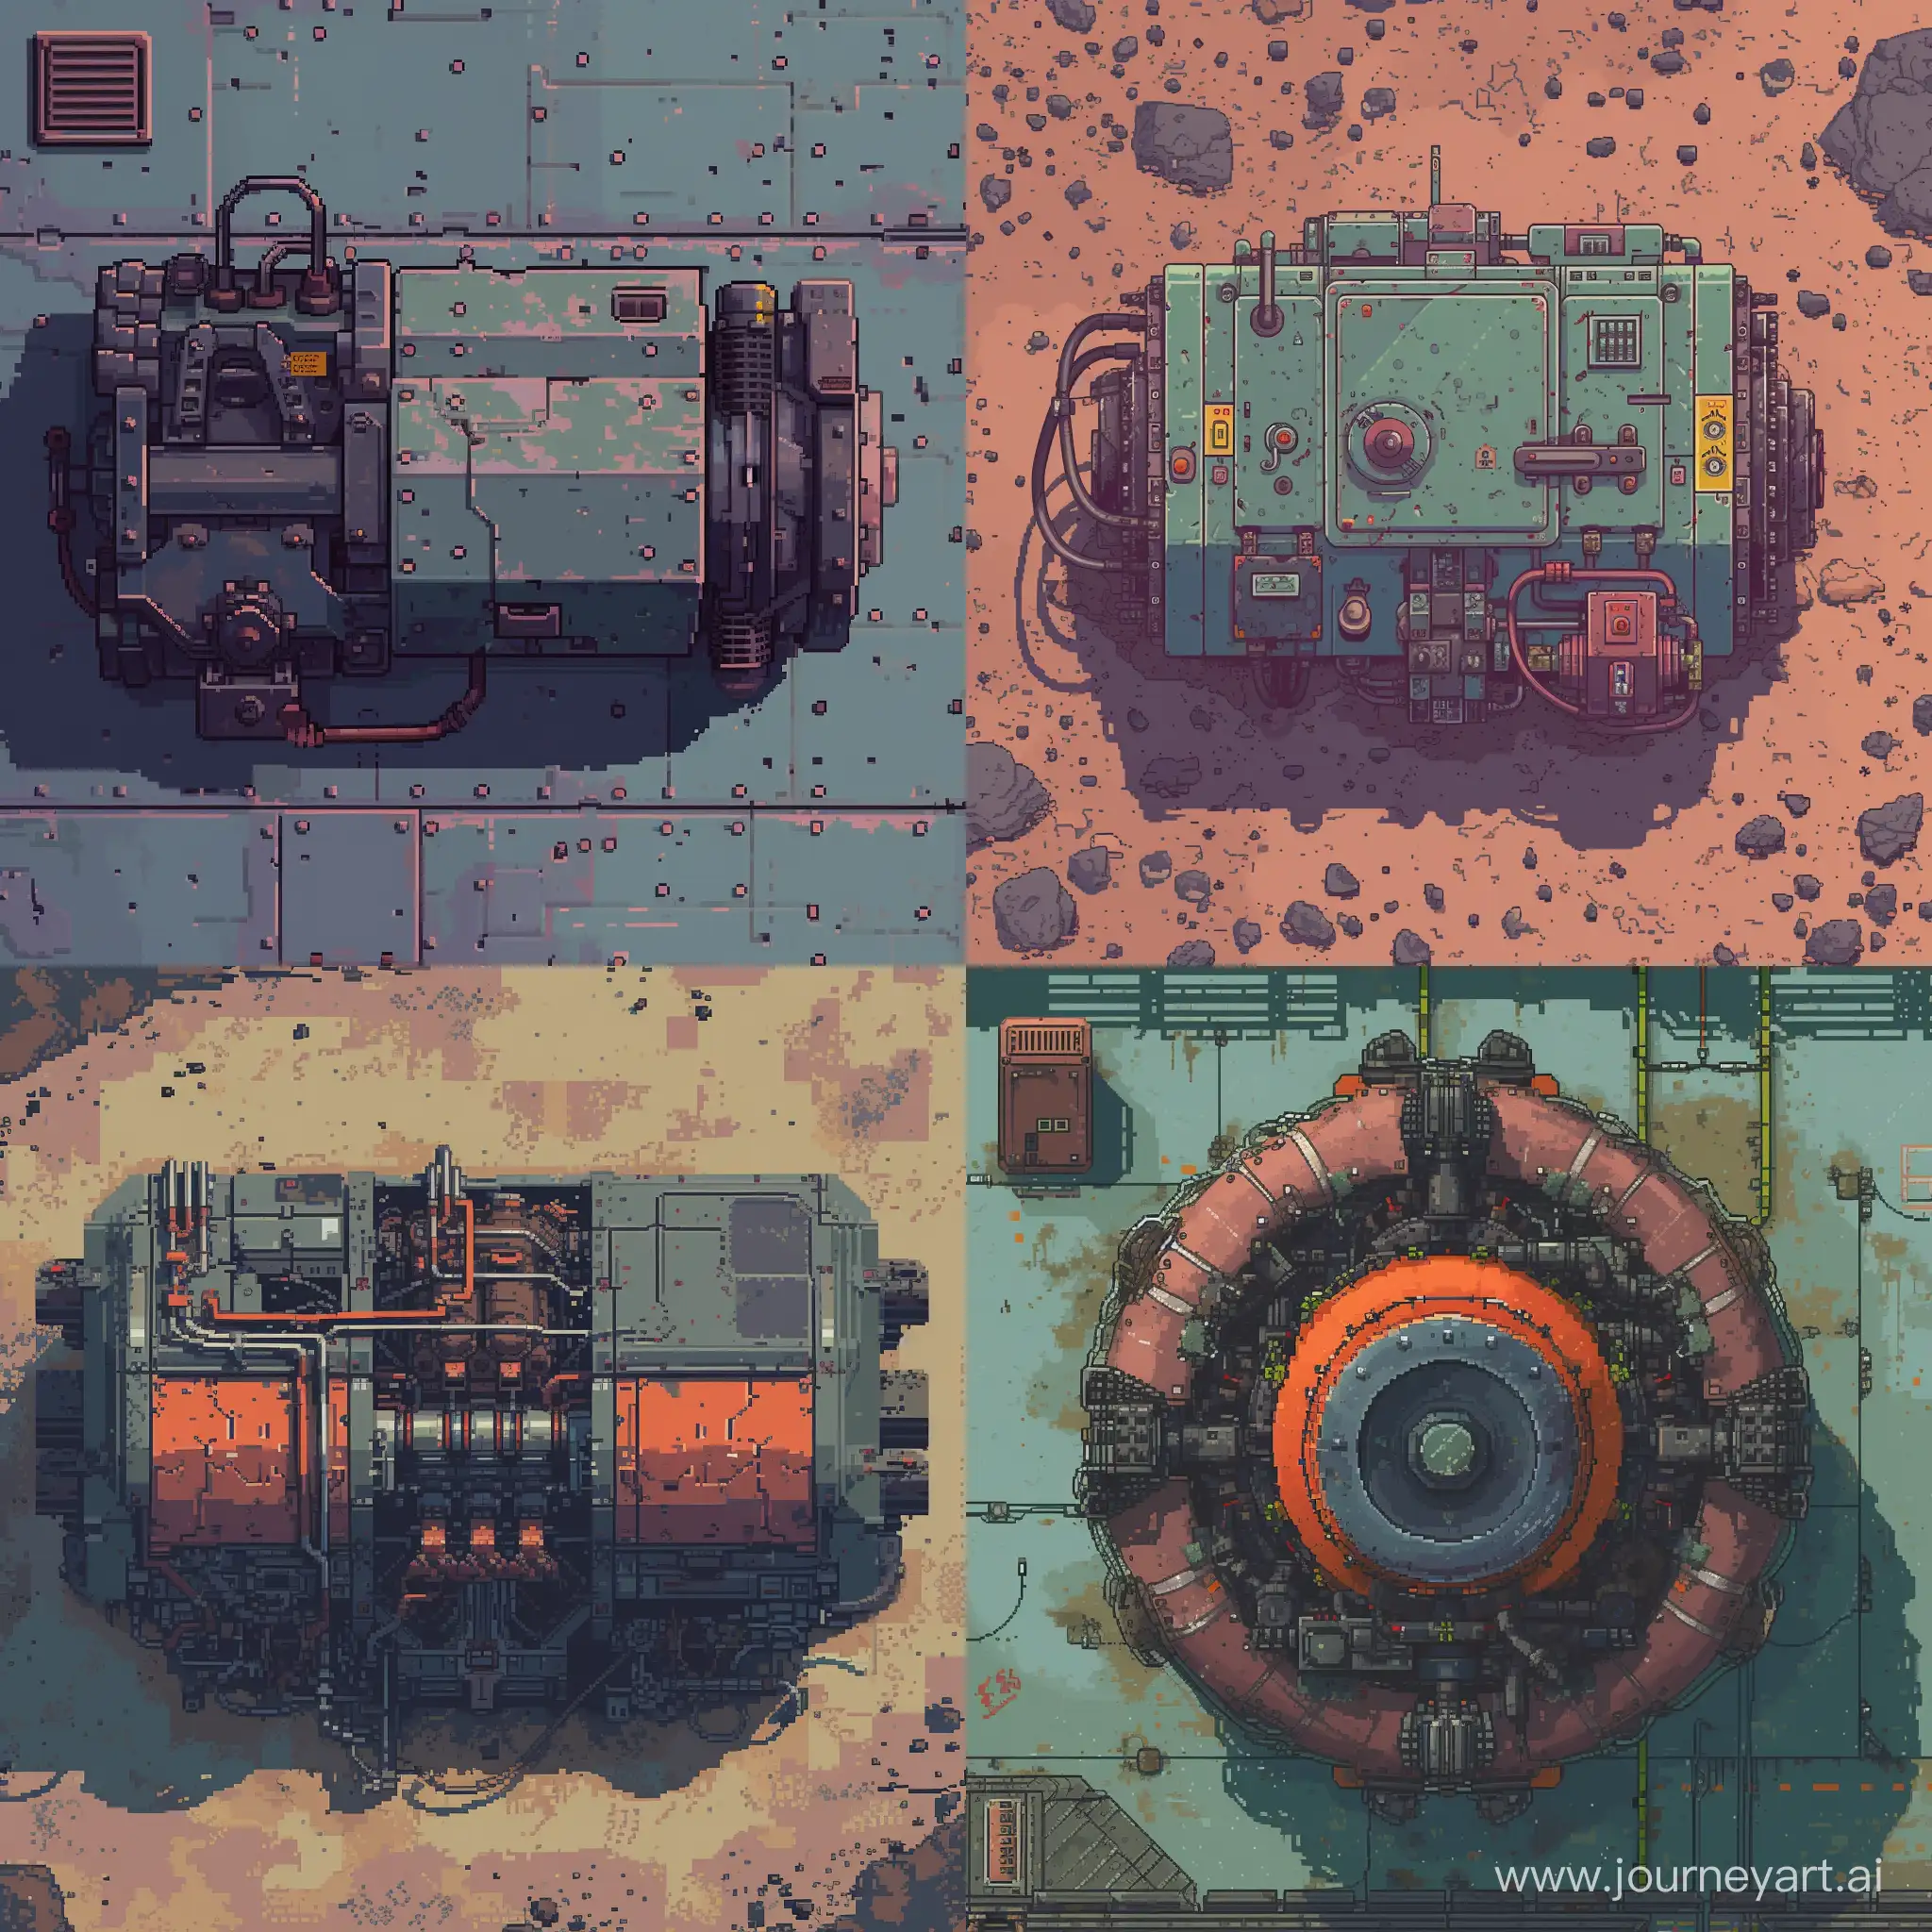 Deserted-Spaceship-Generator-Pixel-Art-TopDown-View-1024x1024